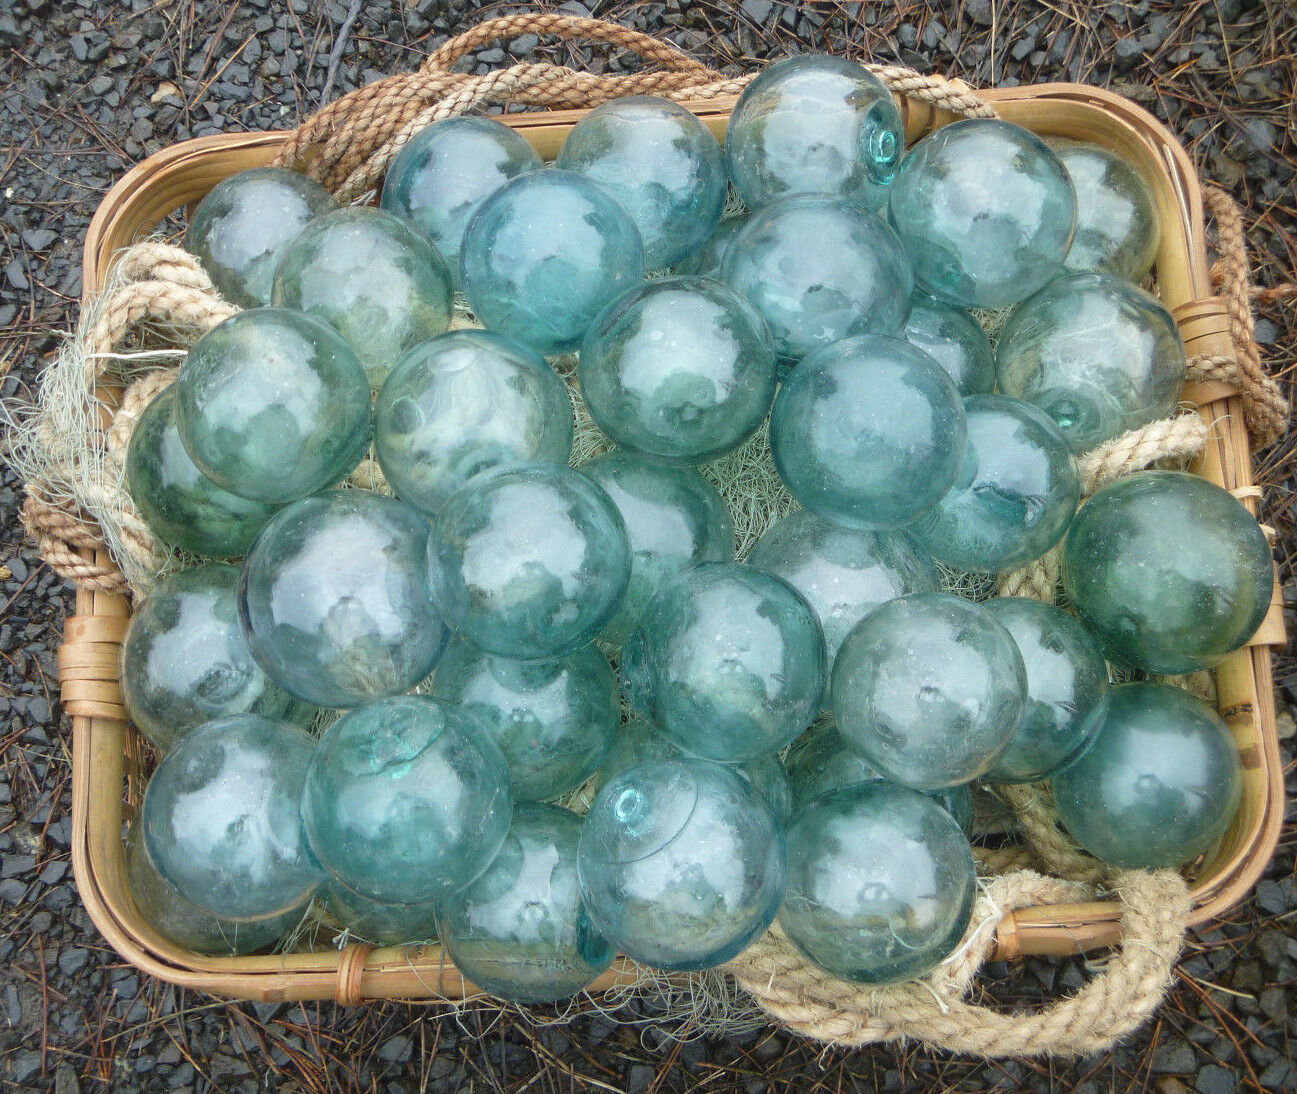 Japanese Glass Fishing Floats 3" Lot-9 Round Buoy Balls Authentic Vntg